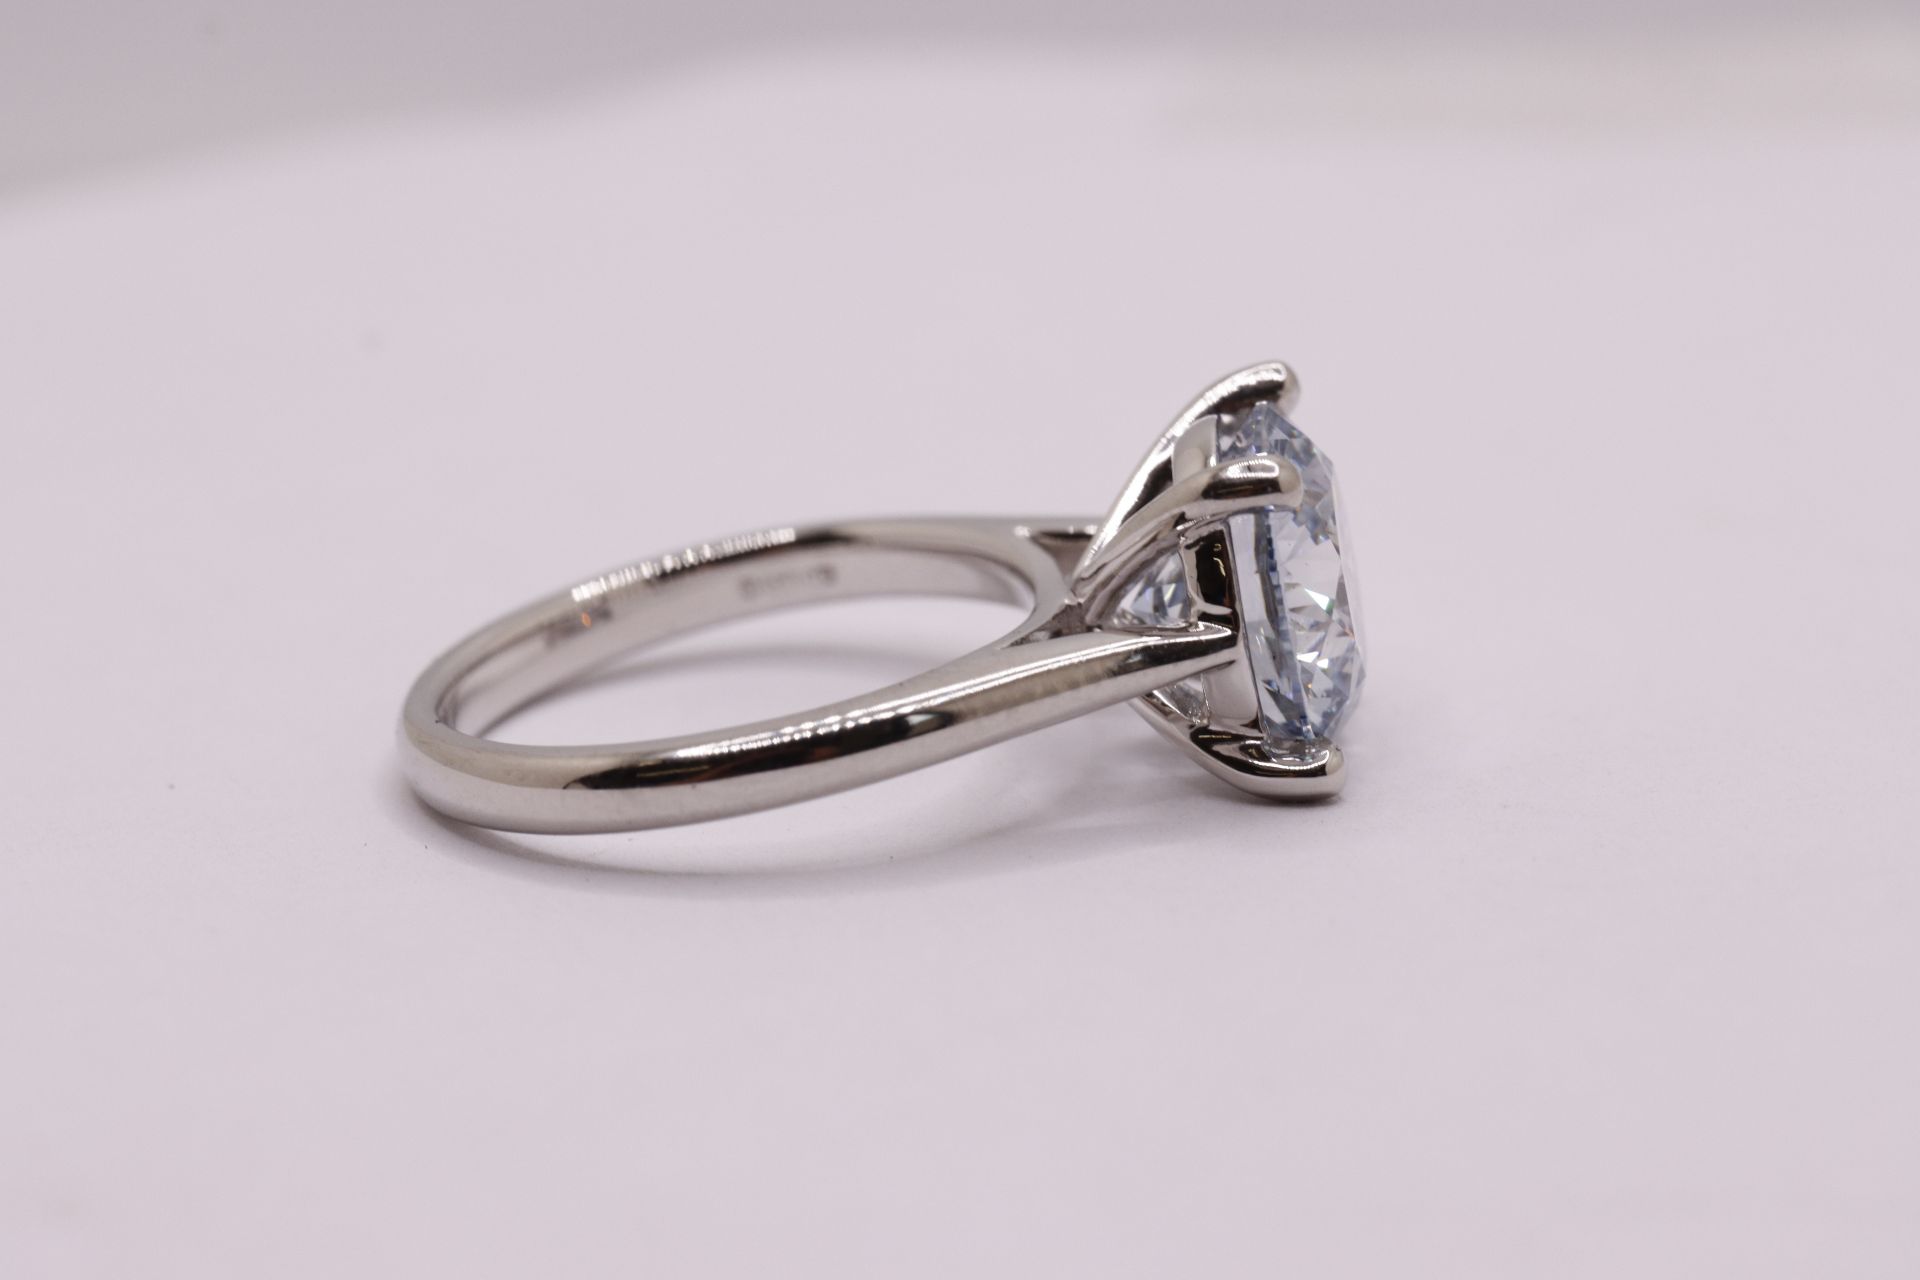 ** ON SALE **Round Brilliant Cut Diamond 4.04 Carat Fancy Blue Colour VVS2 Clarity Platinum Ring - Image 10 of 14